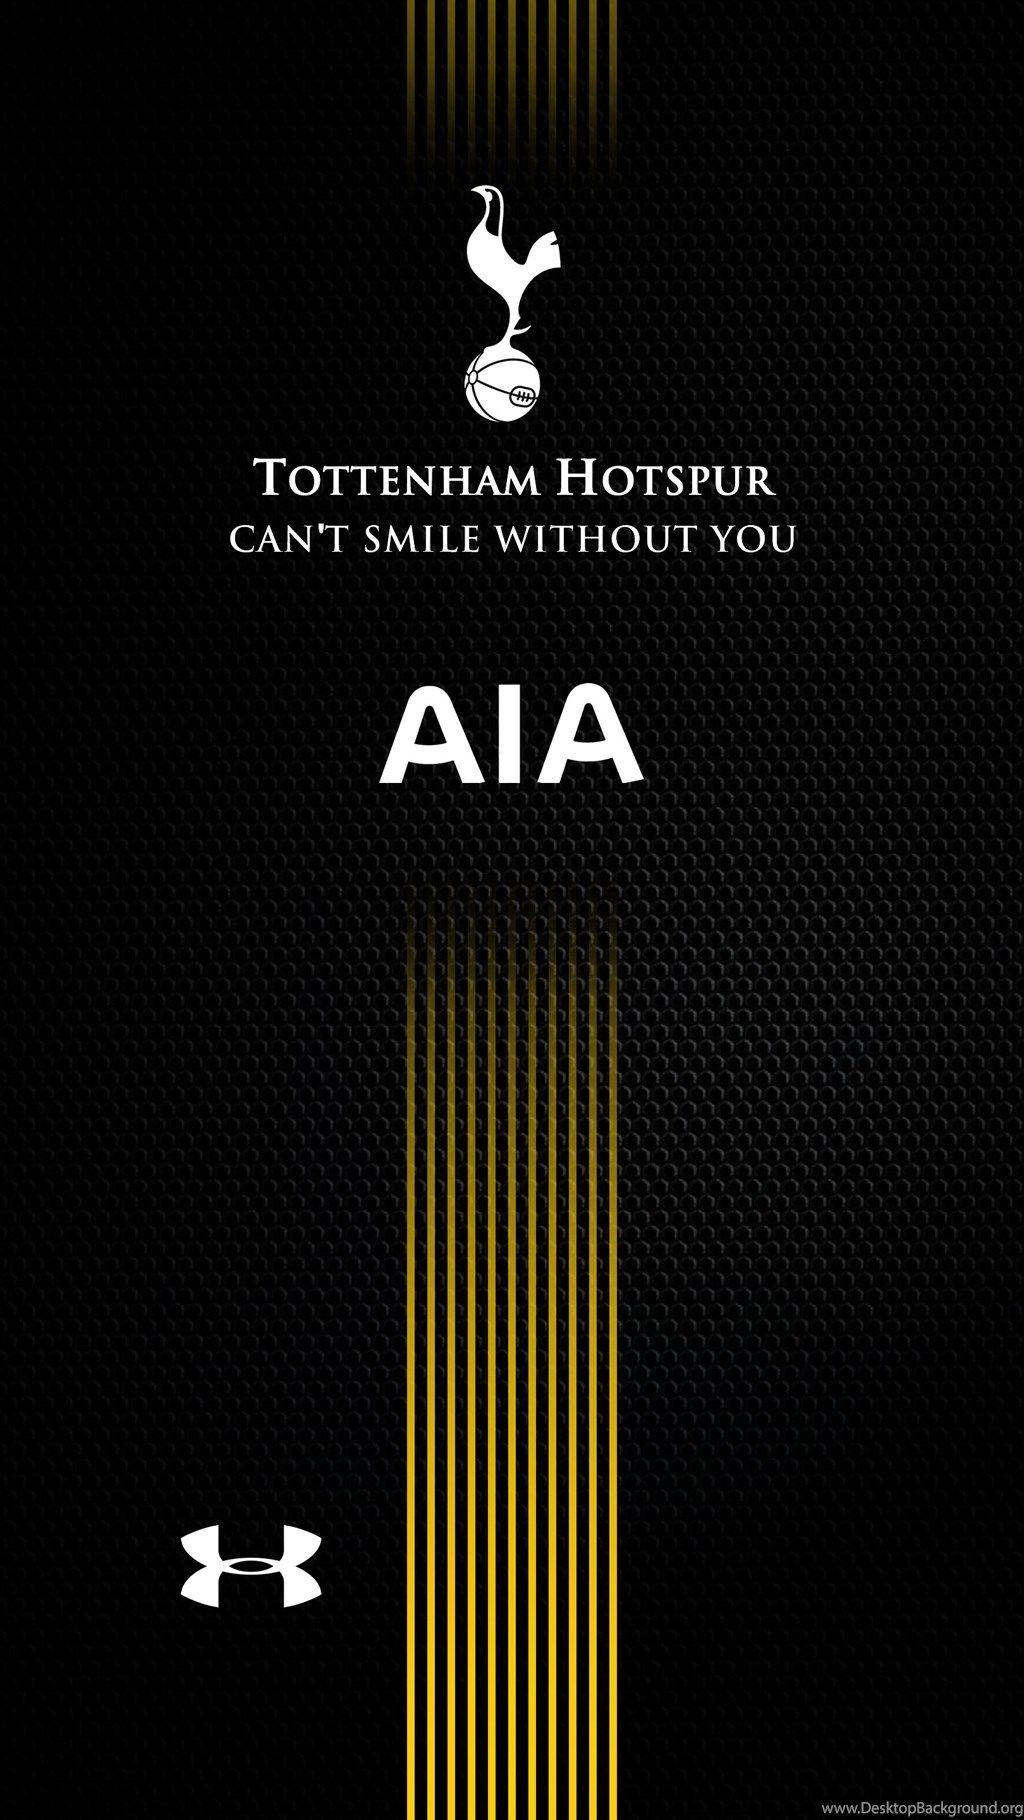 Download Tottenham Hotspur Smartphone Wallpaper ByGoloteHD